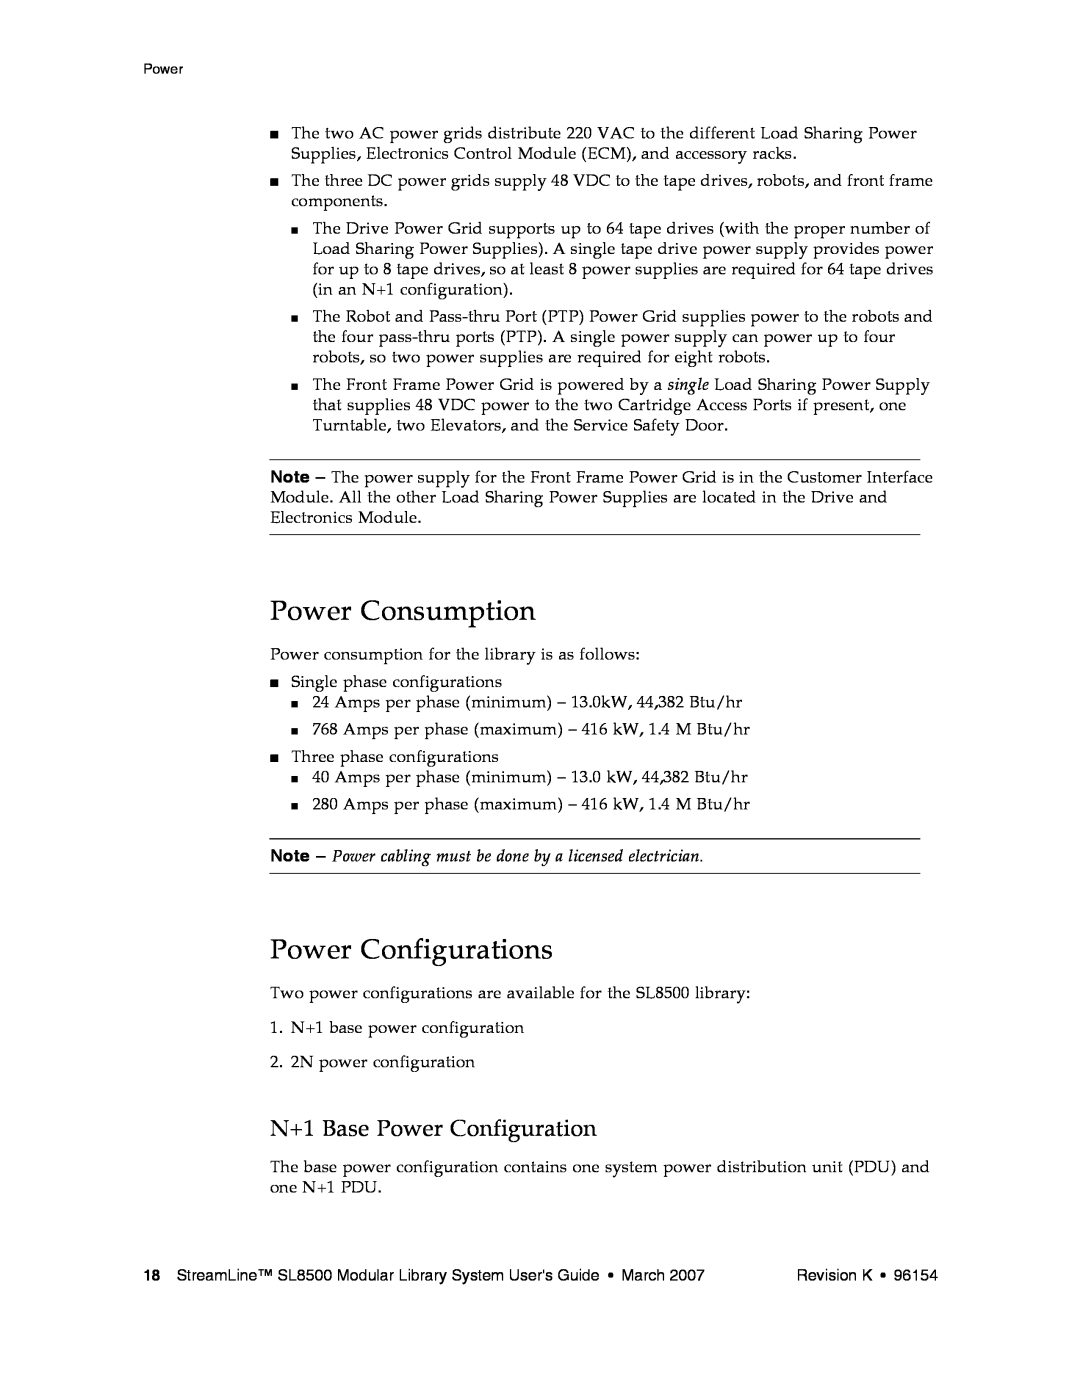 Sun Microsystems SL8500 manual Power Consumption, Power Configurations, N+1 Base Power Configuration 